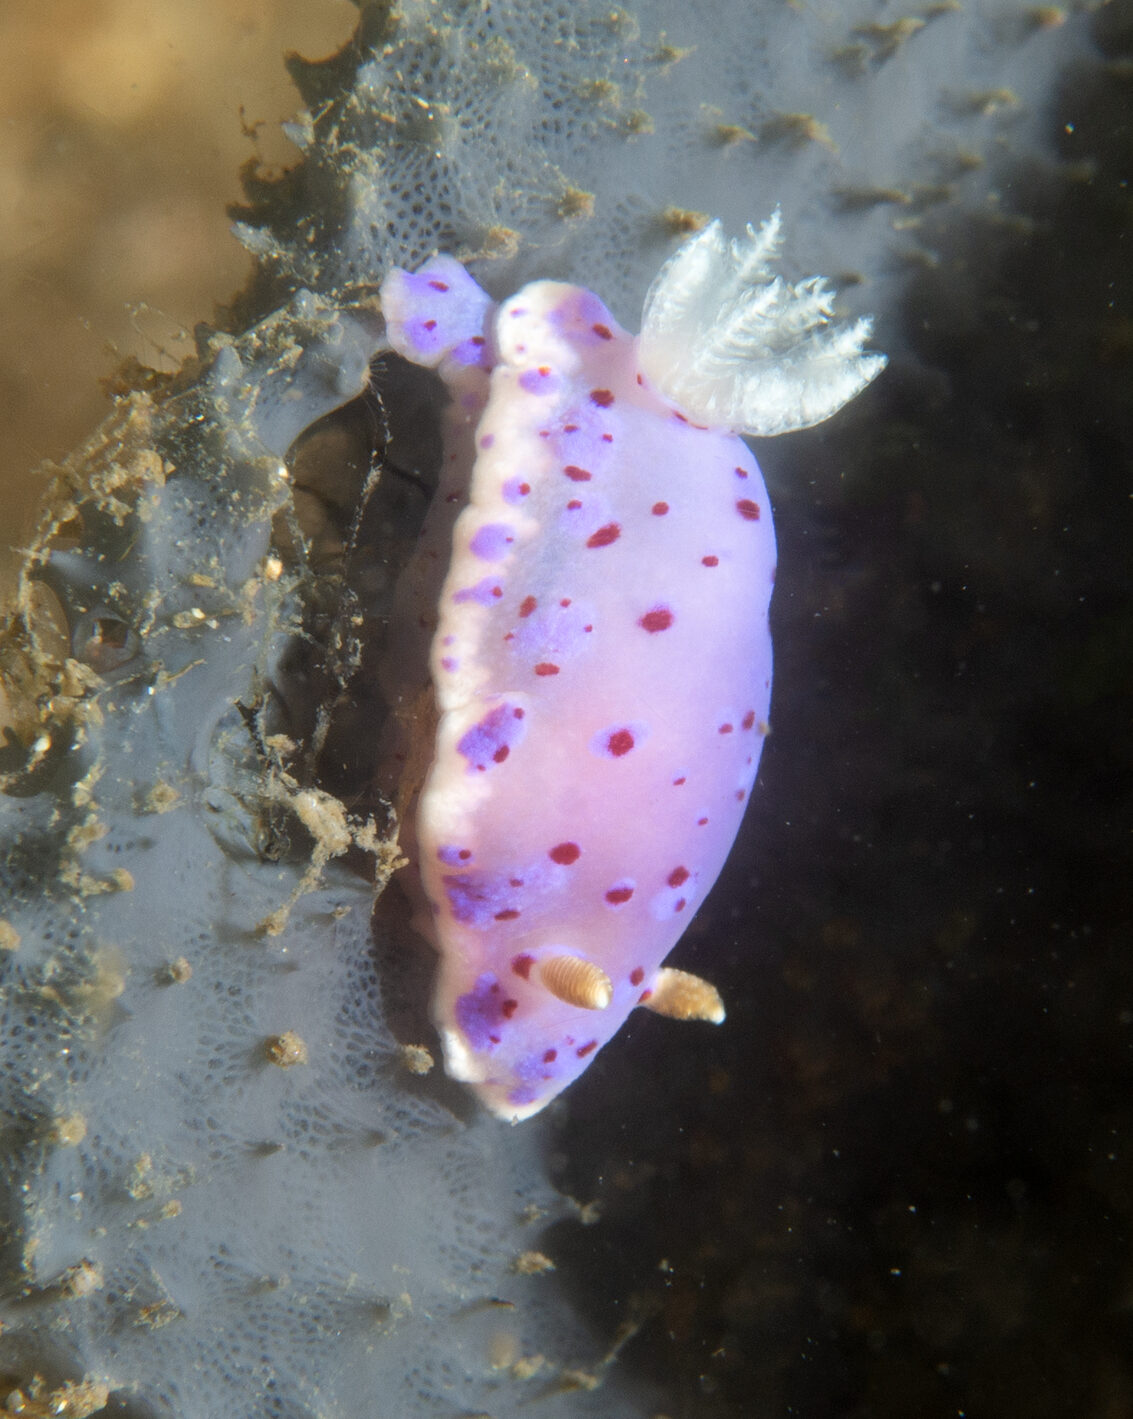 Close up of a purple sea slug